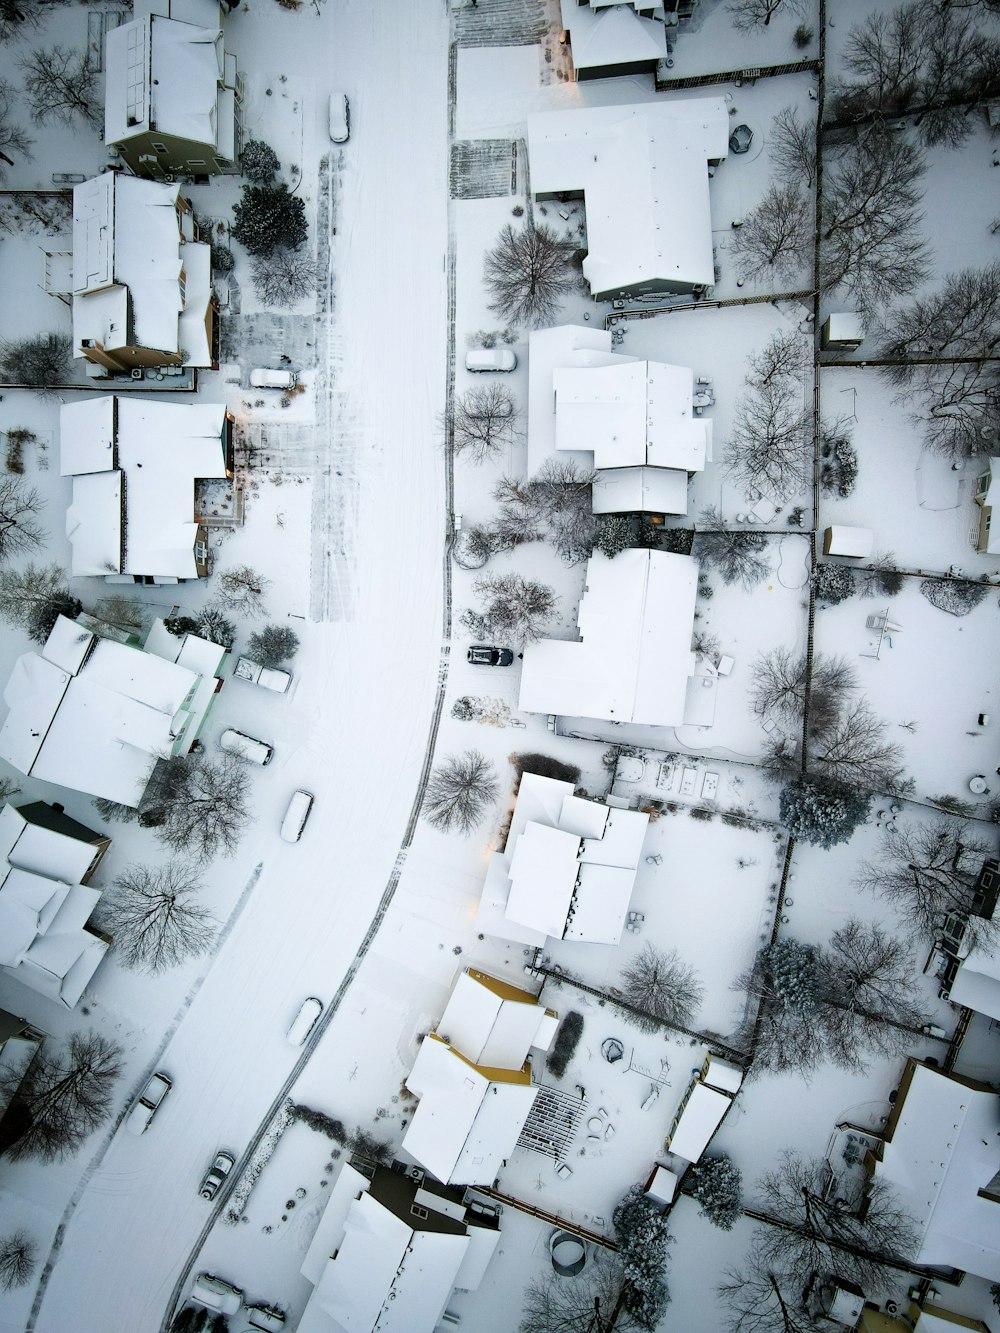 Una veduta aerea di un quartiere coperto di neve